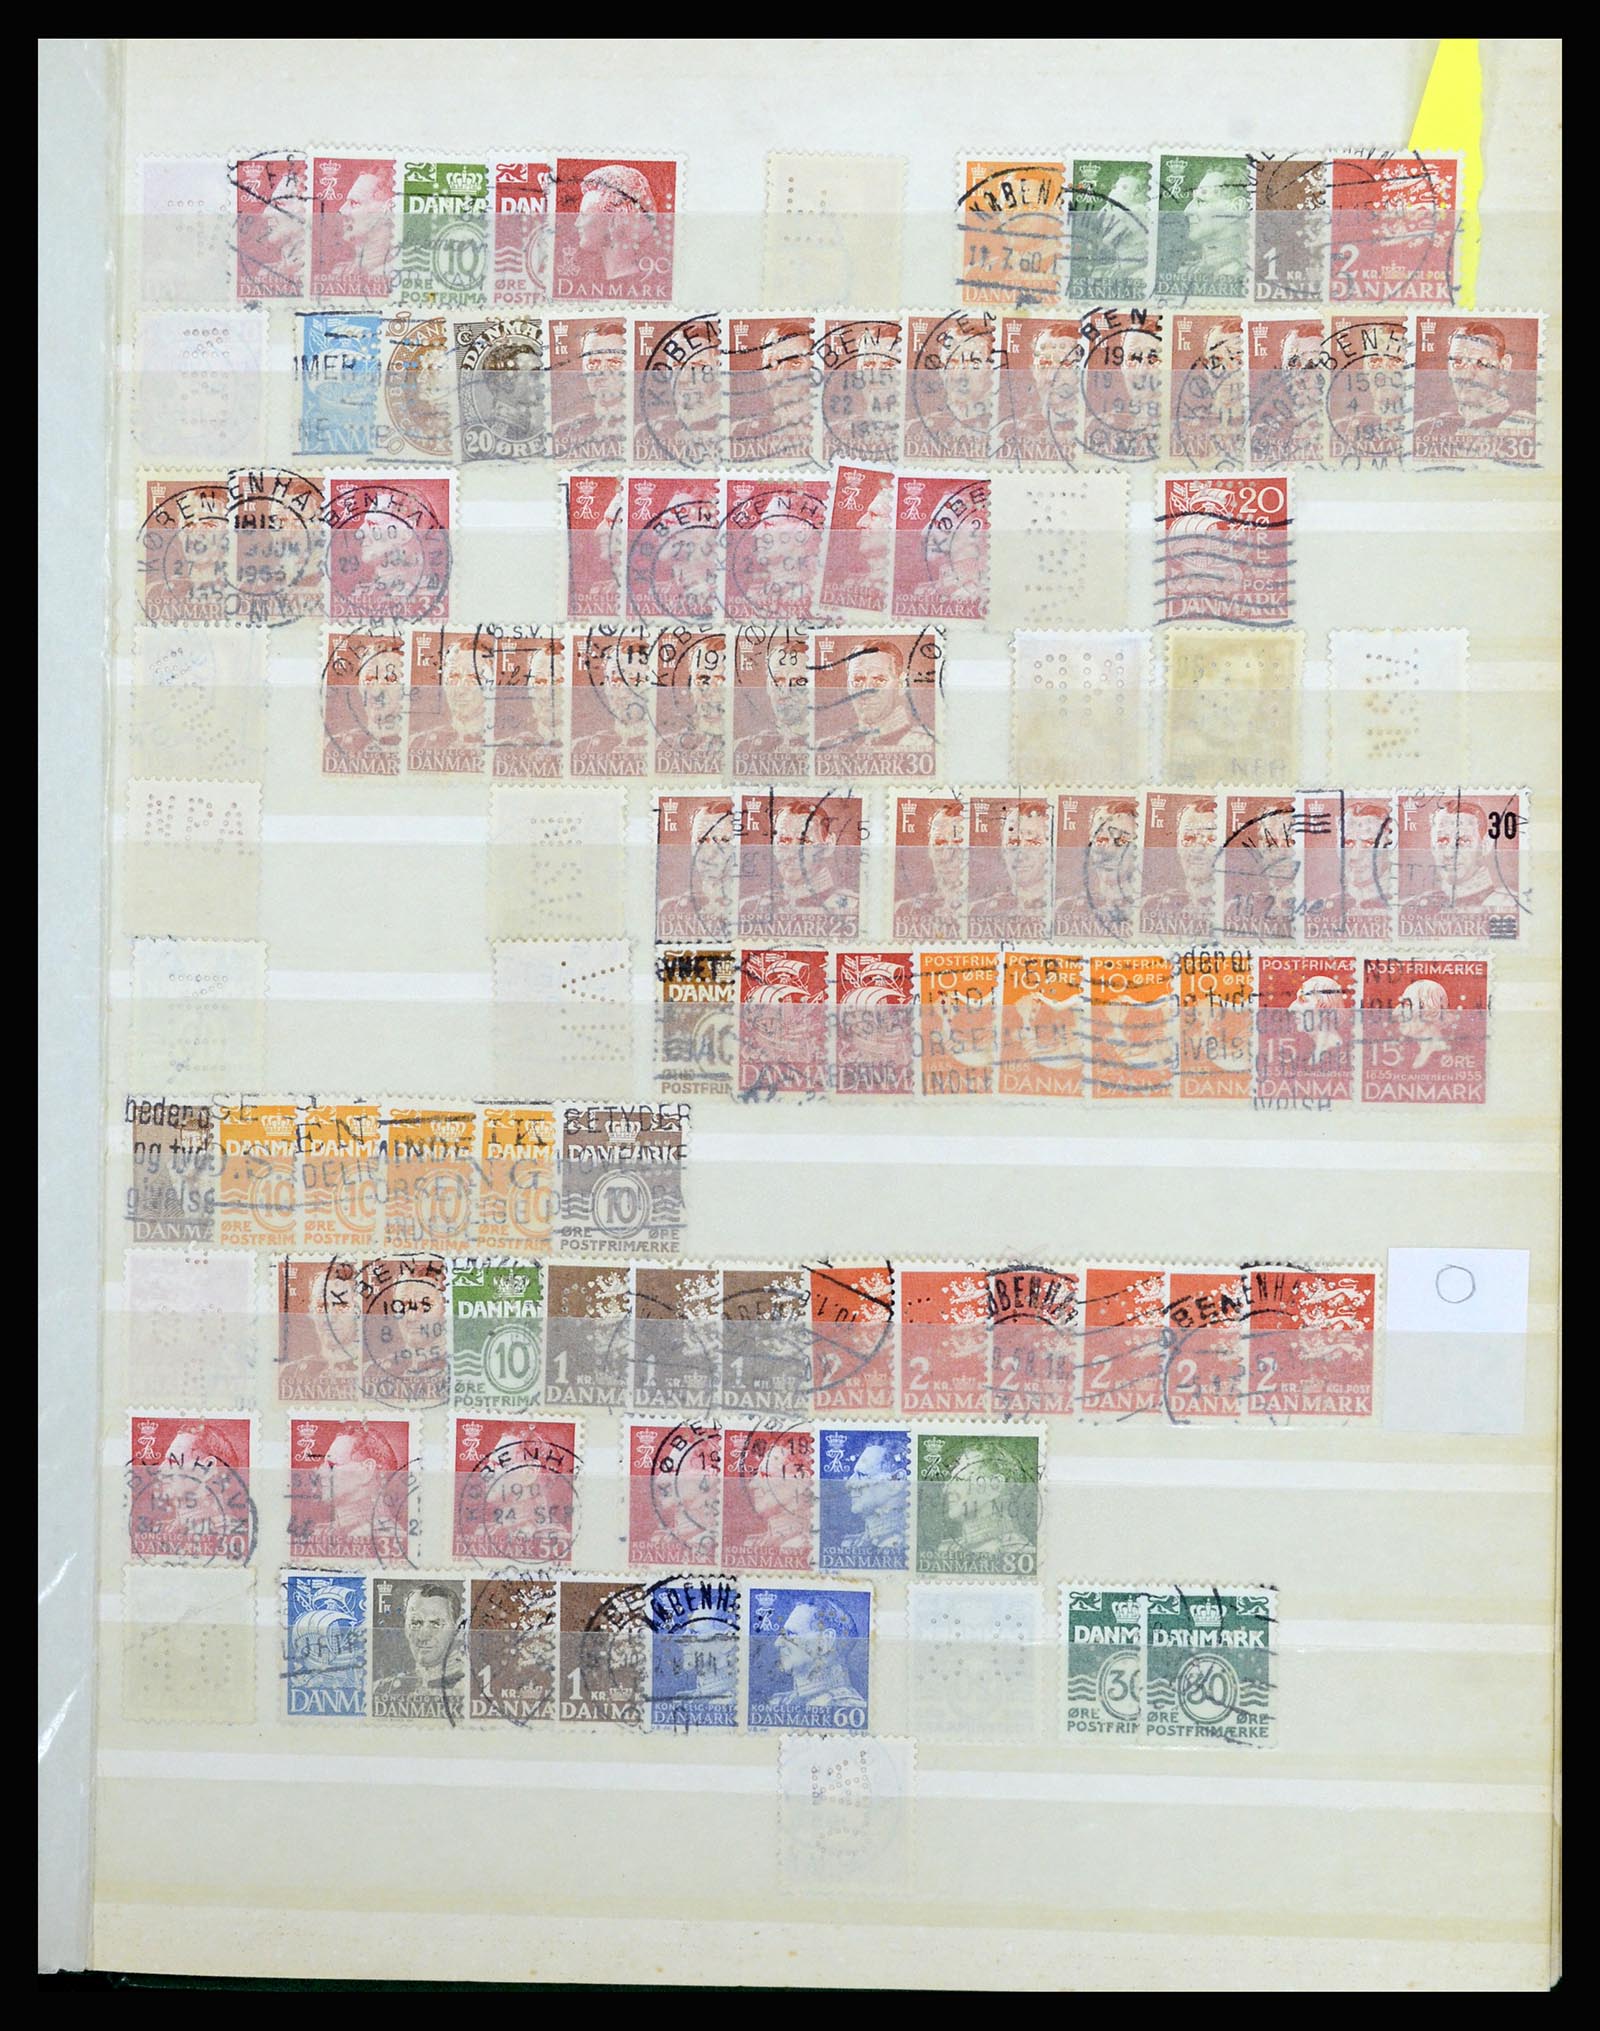 37056 085 - Stamp collection 37056 Denmark perfins.